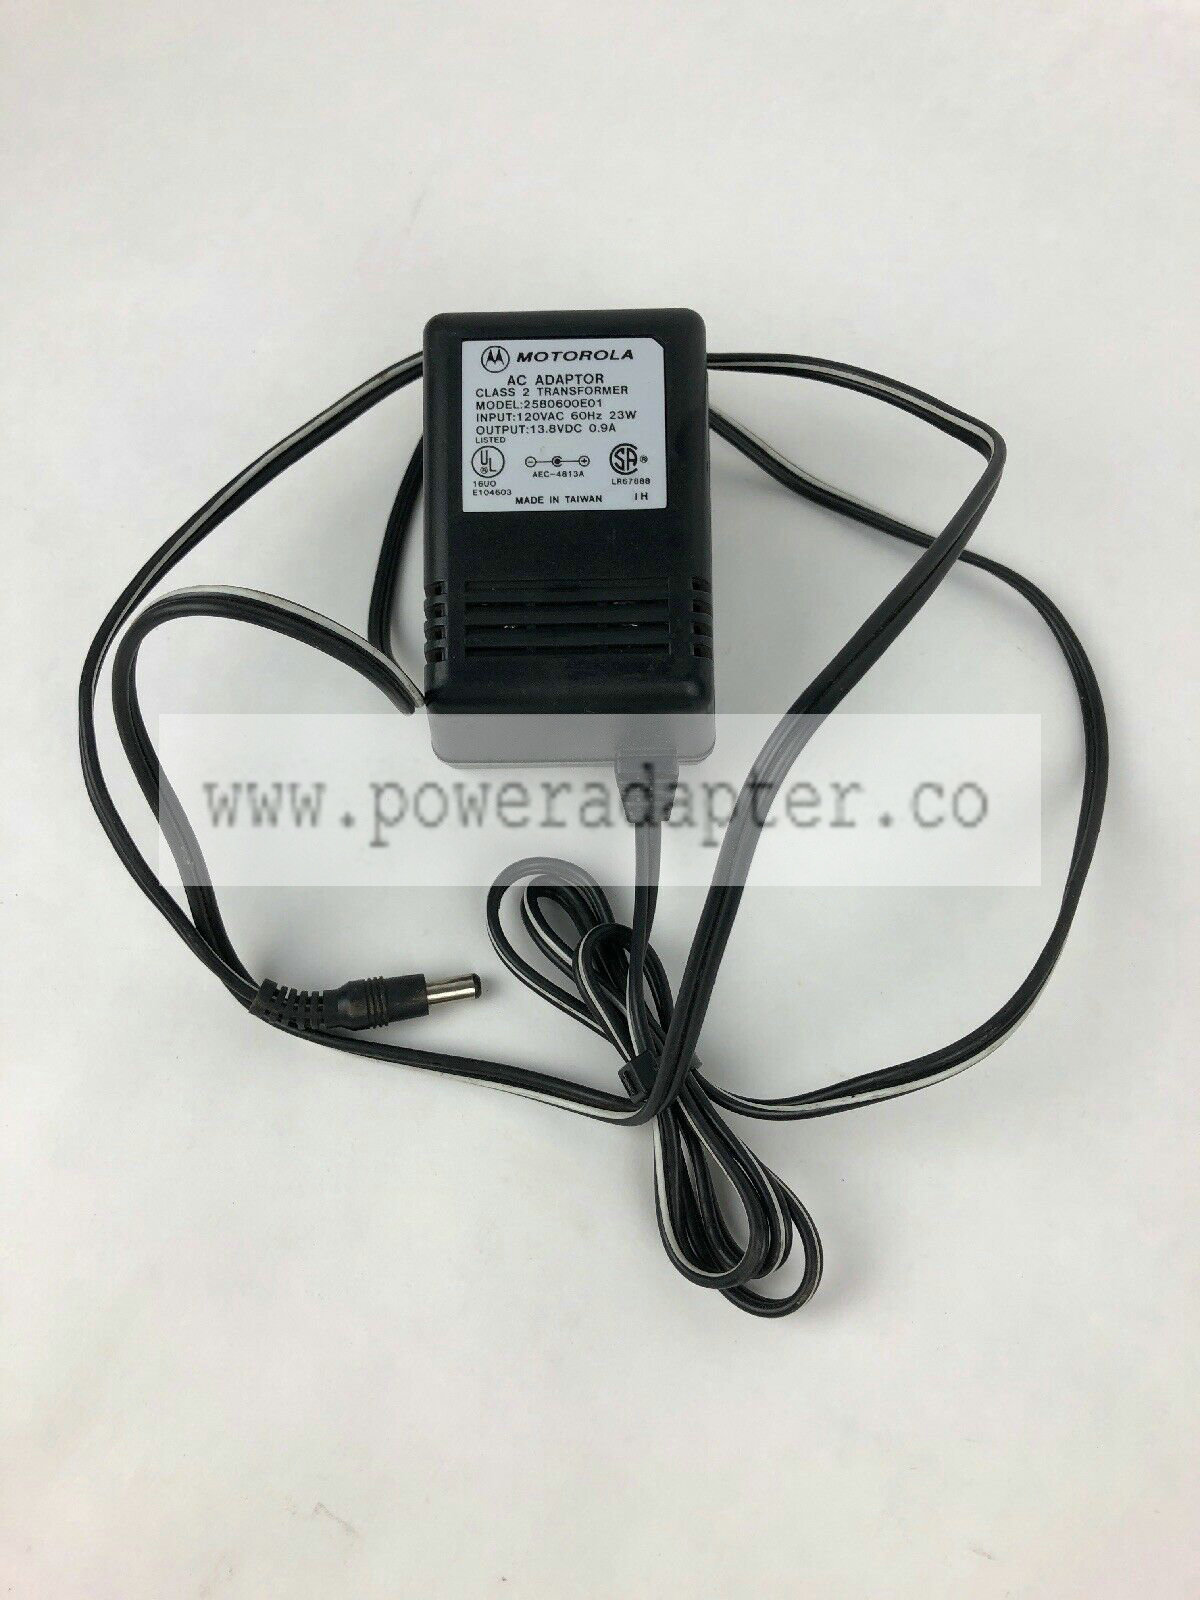 Genuine Motorola AC Adapter Radio Base Charger Plug 13.8V 0.9A Model 2580600E01 Brand: Motorola MPN: Class 2 Trans - Click Image to Close